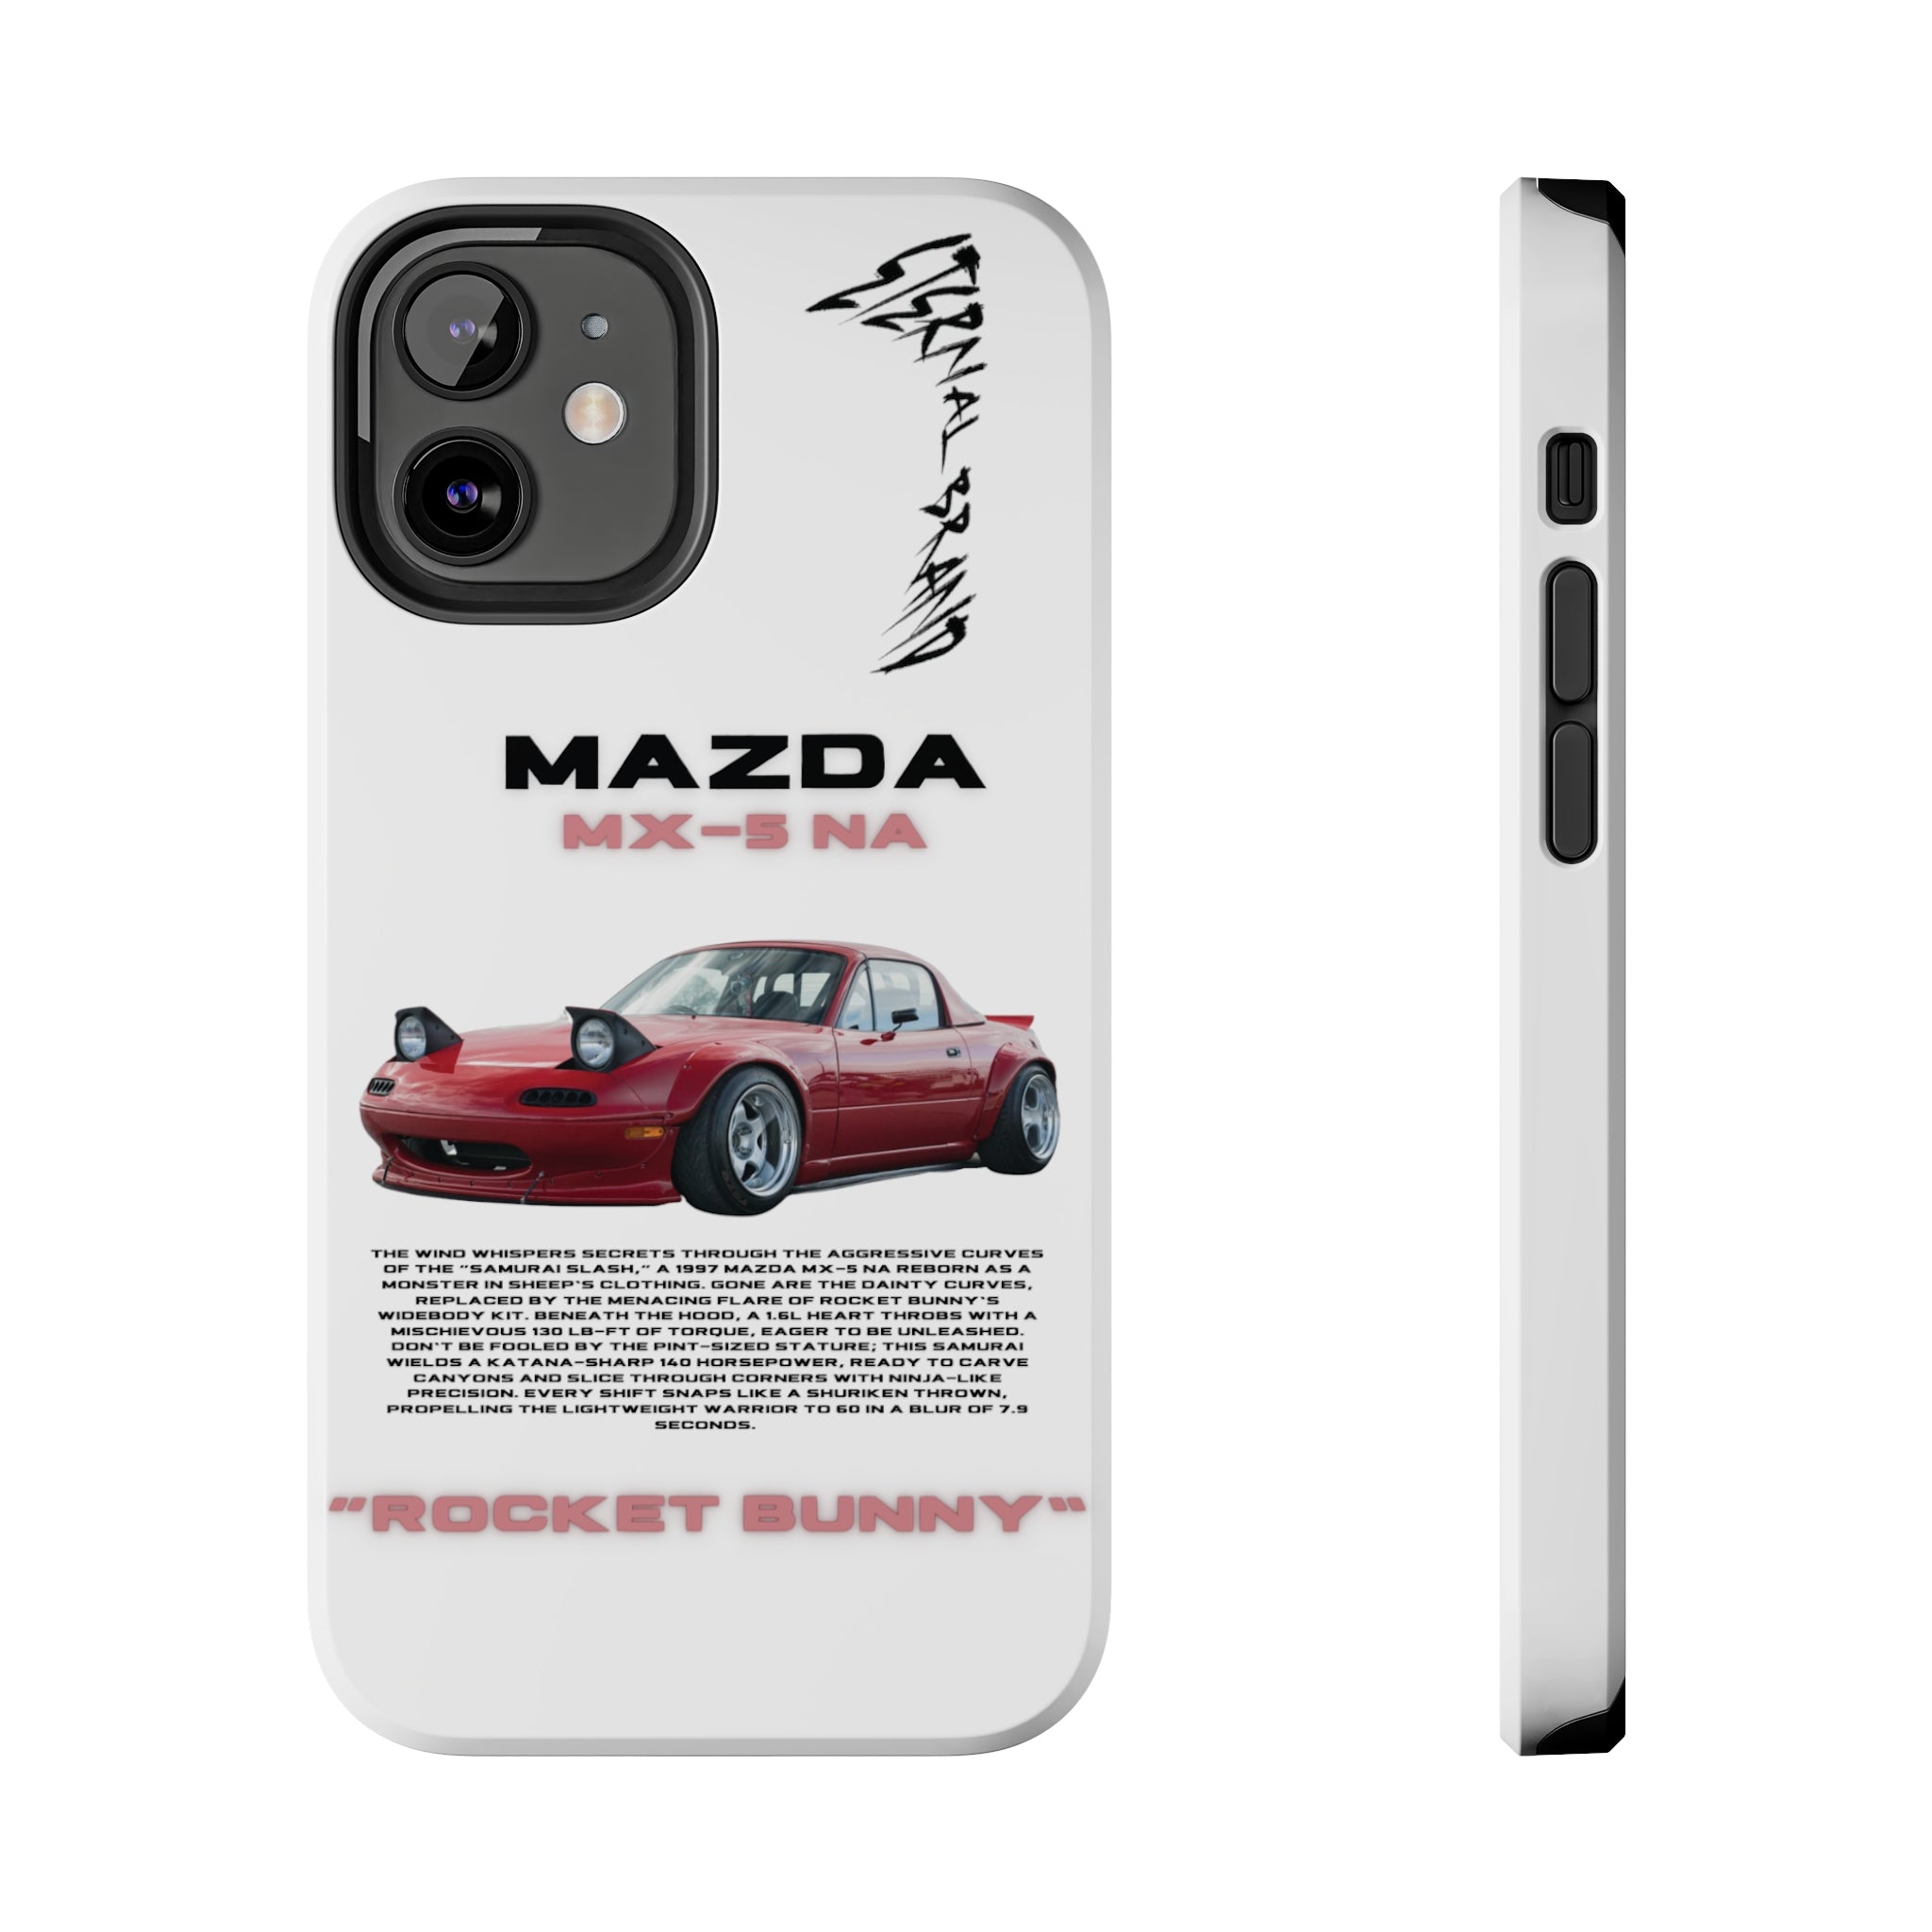 Mazda Miata MX-5 NA "Rocket Bunny"